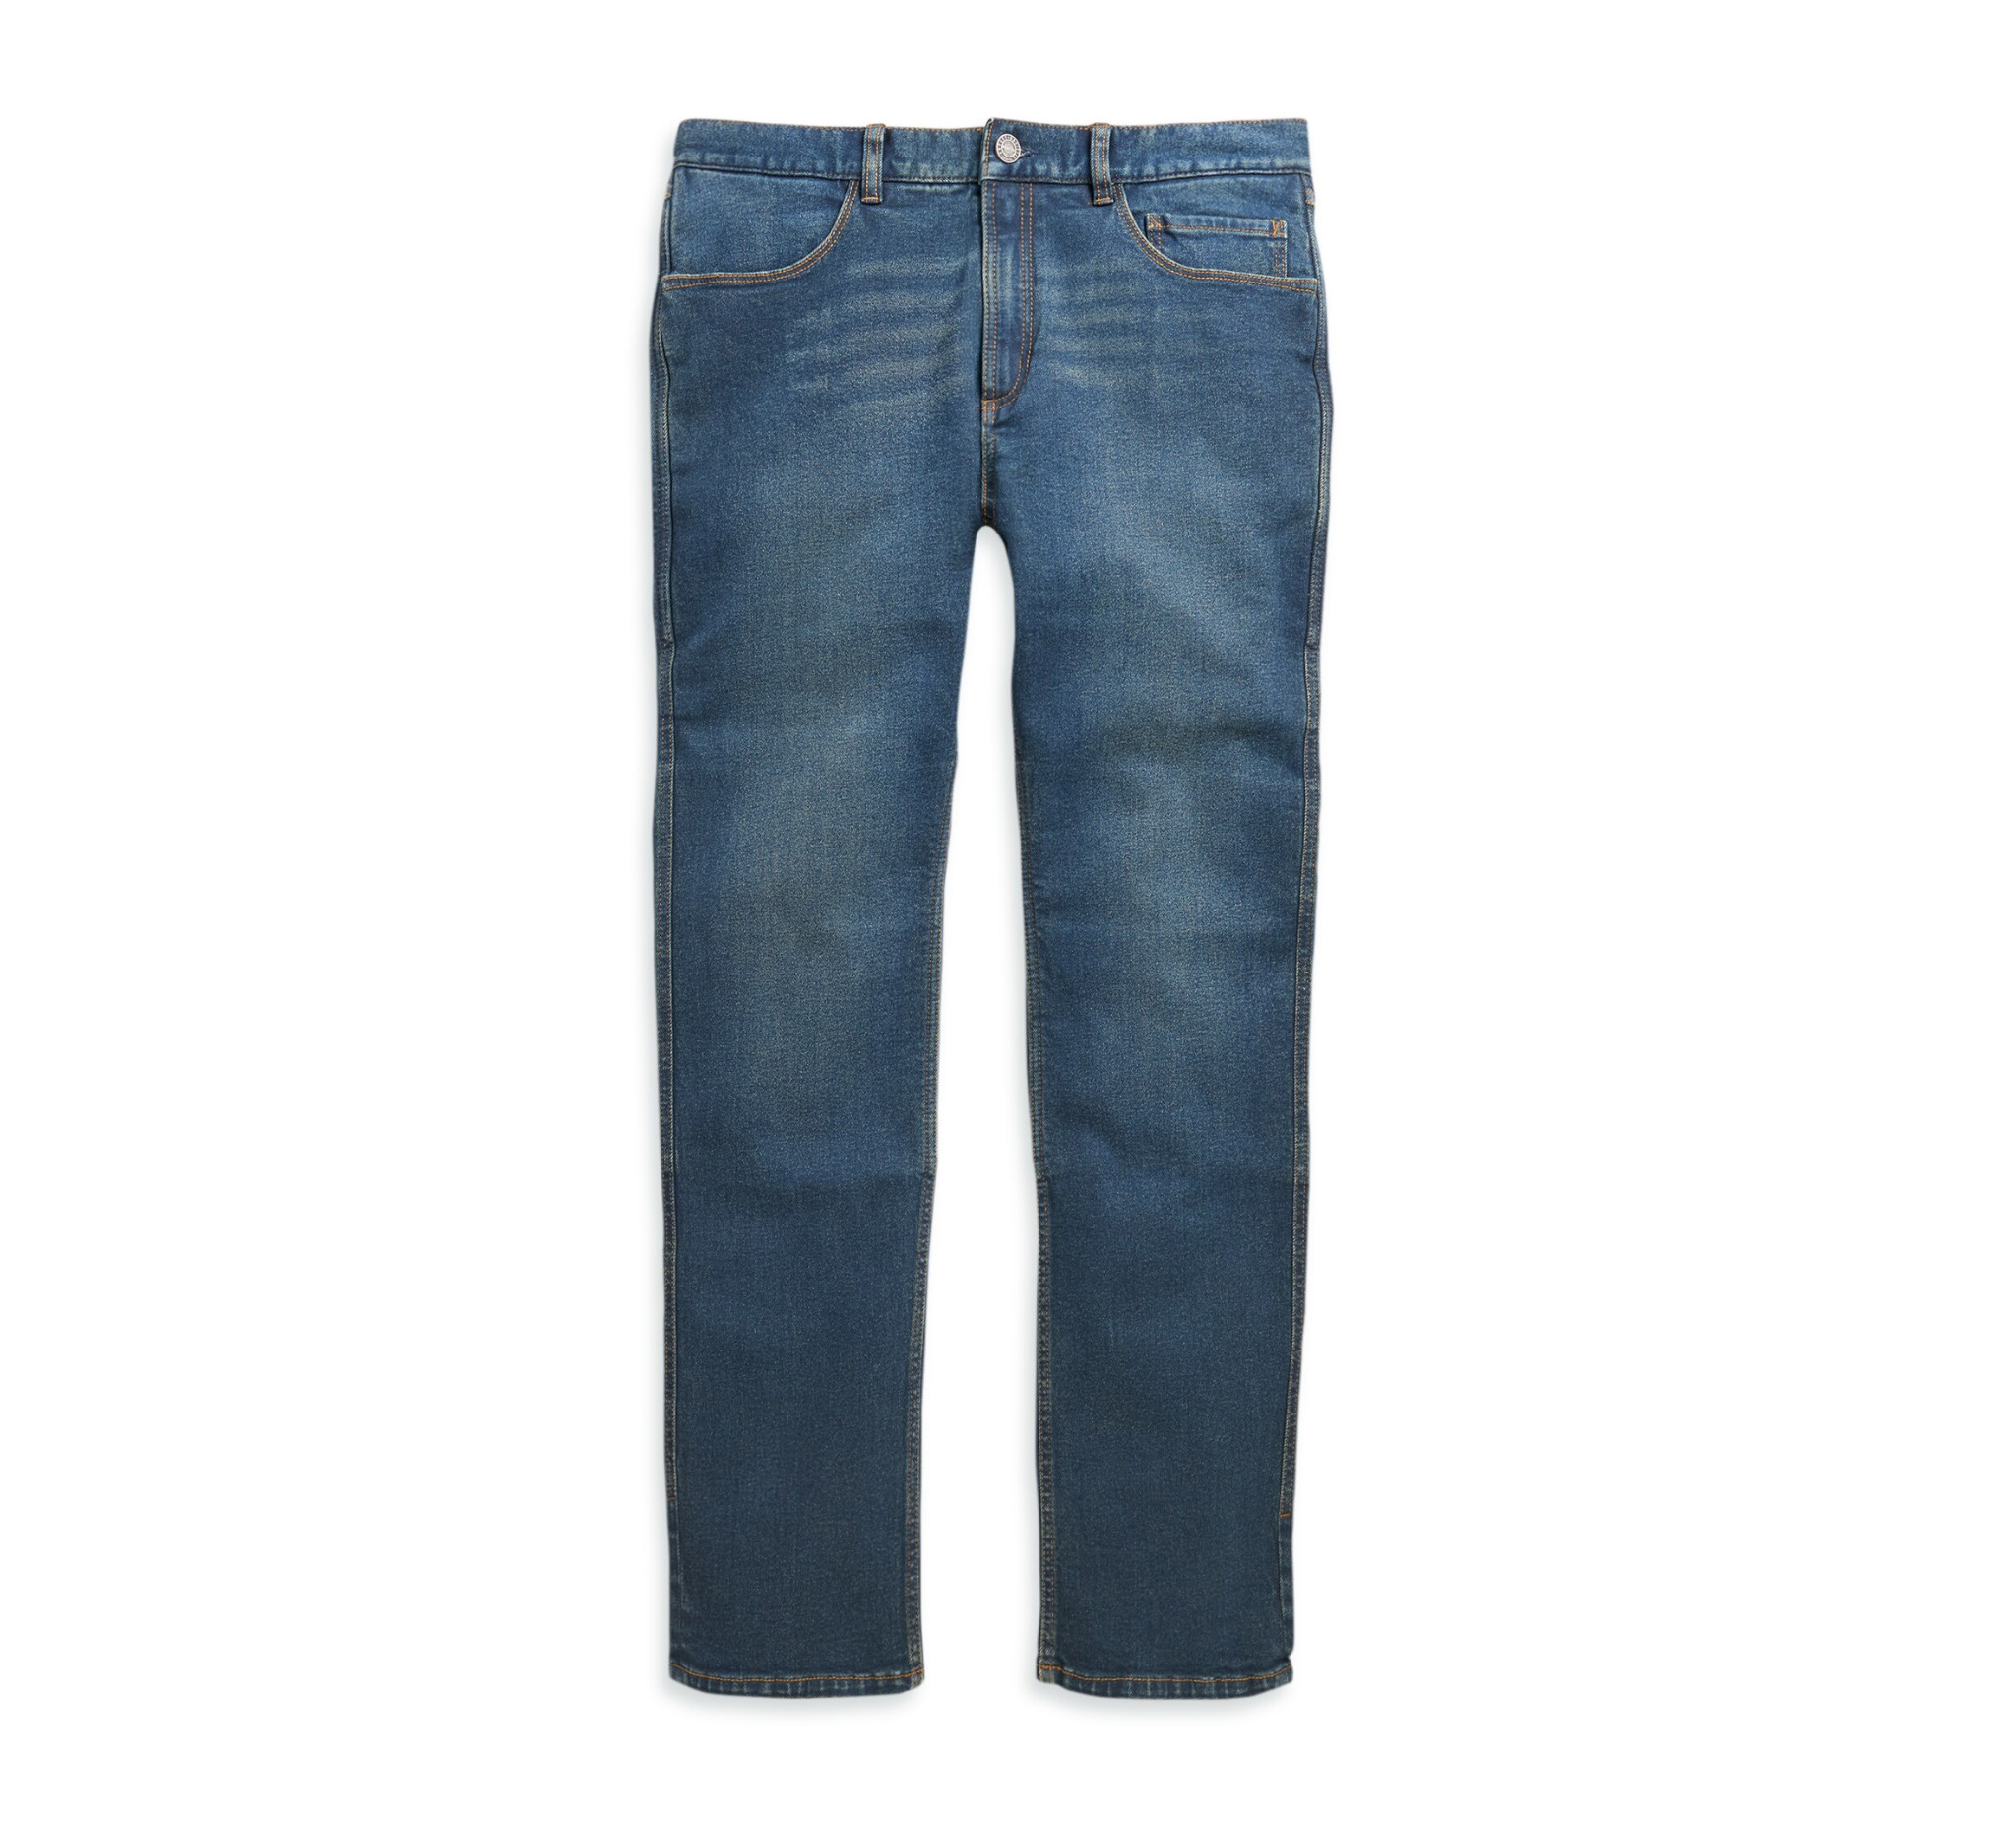 harley davidson kevlar jeans